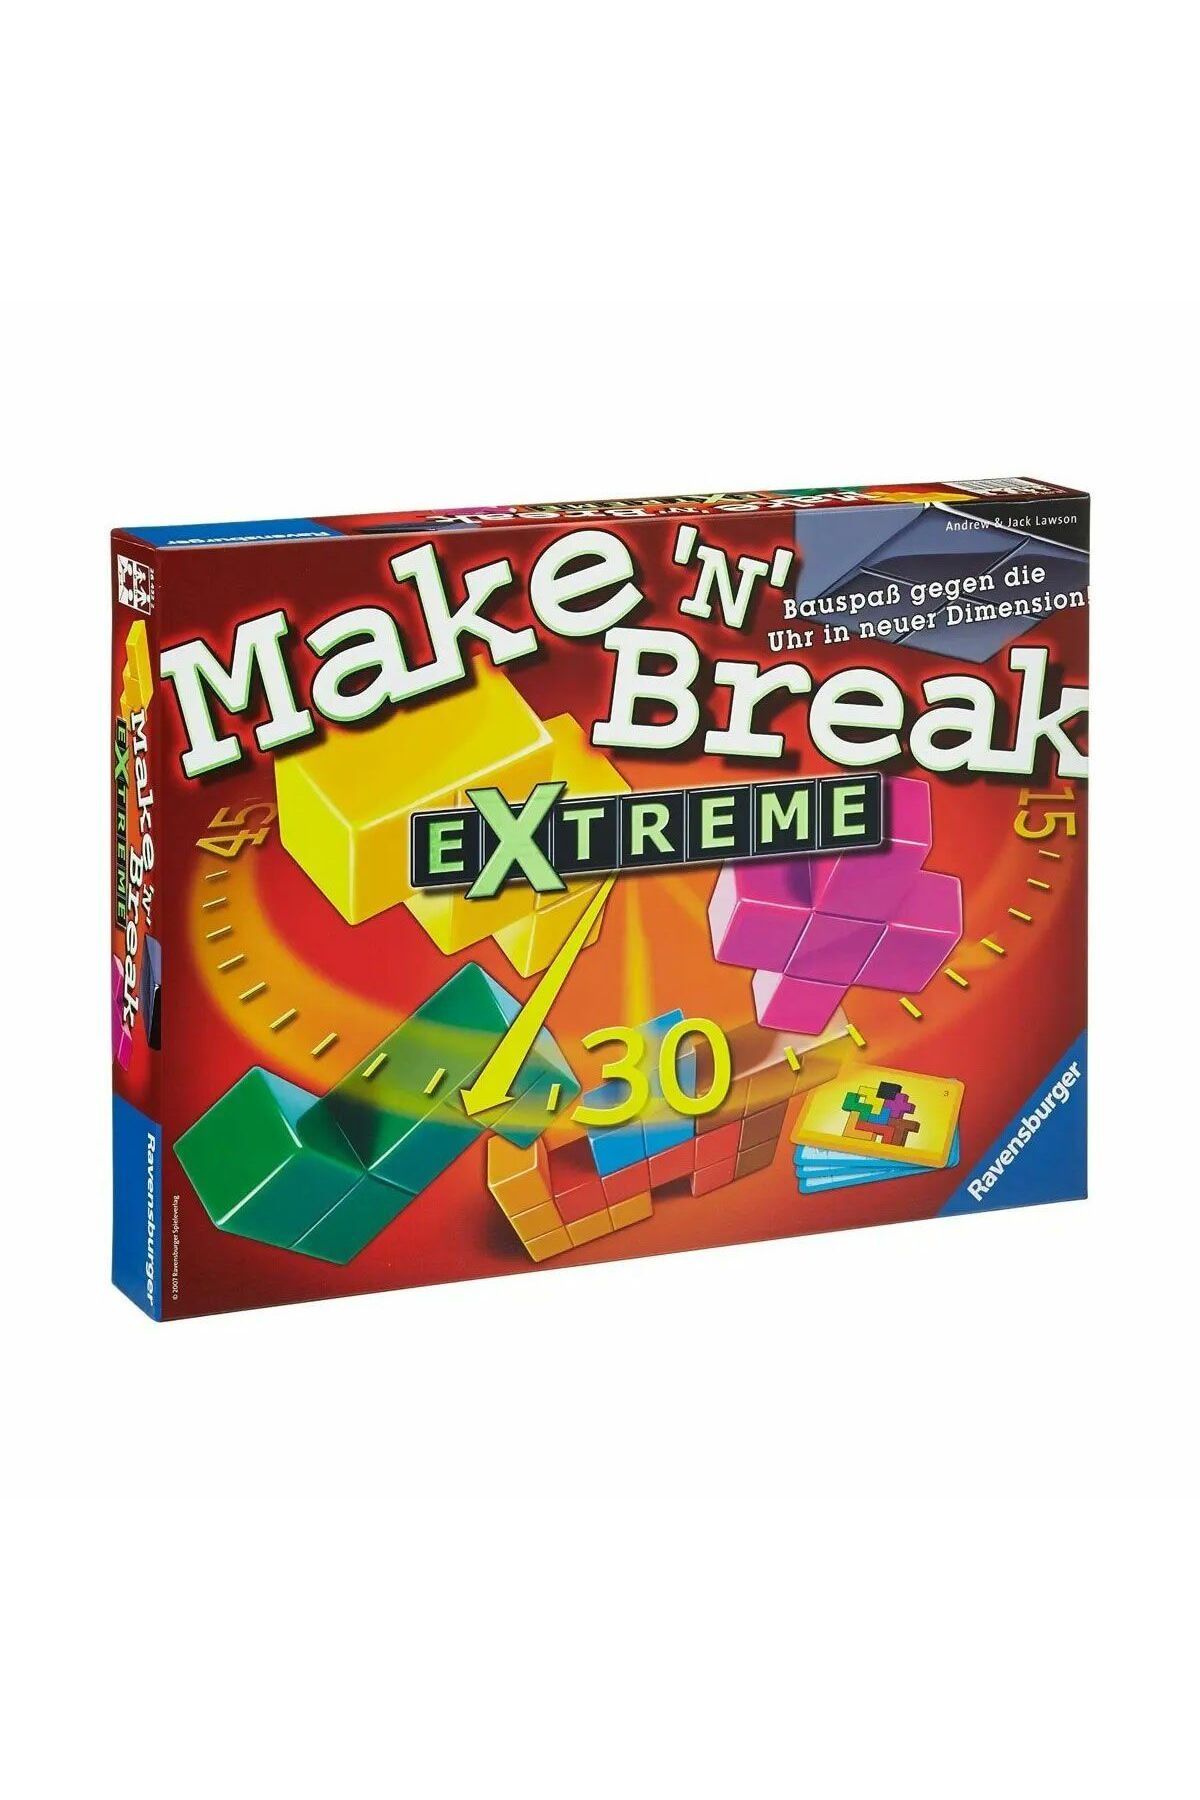 Make 'N' Break Extreme Game - Ravensburger 2007